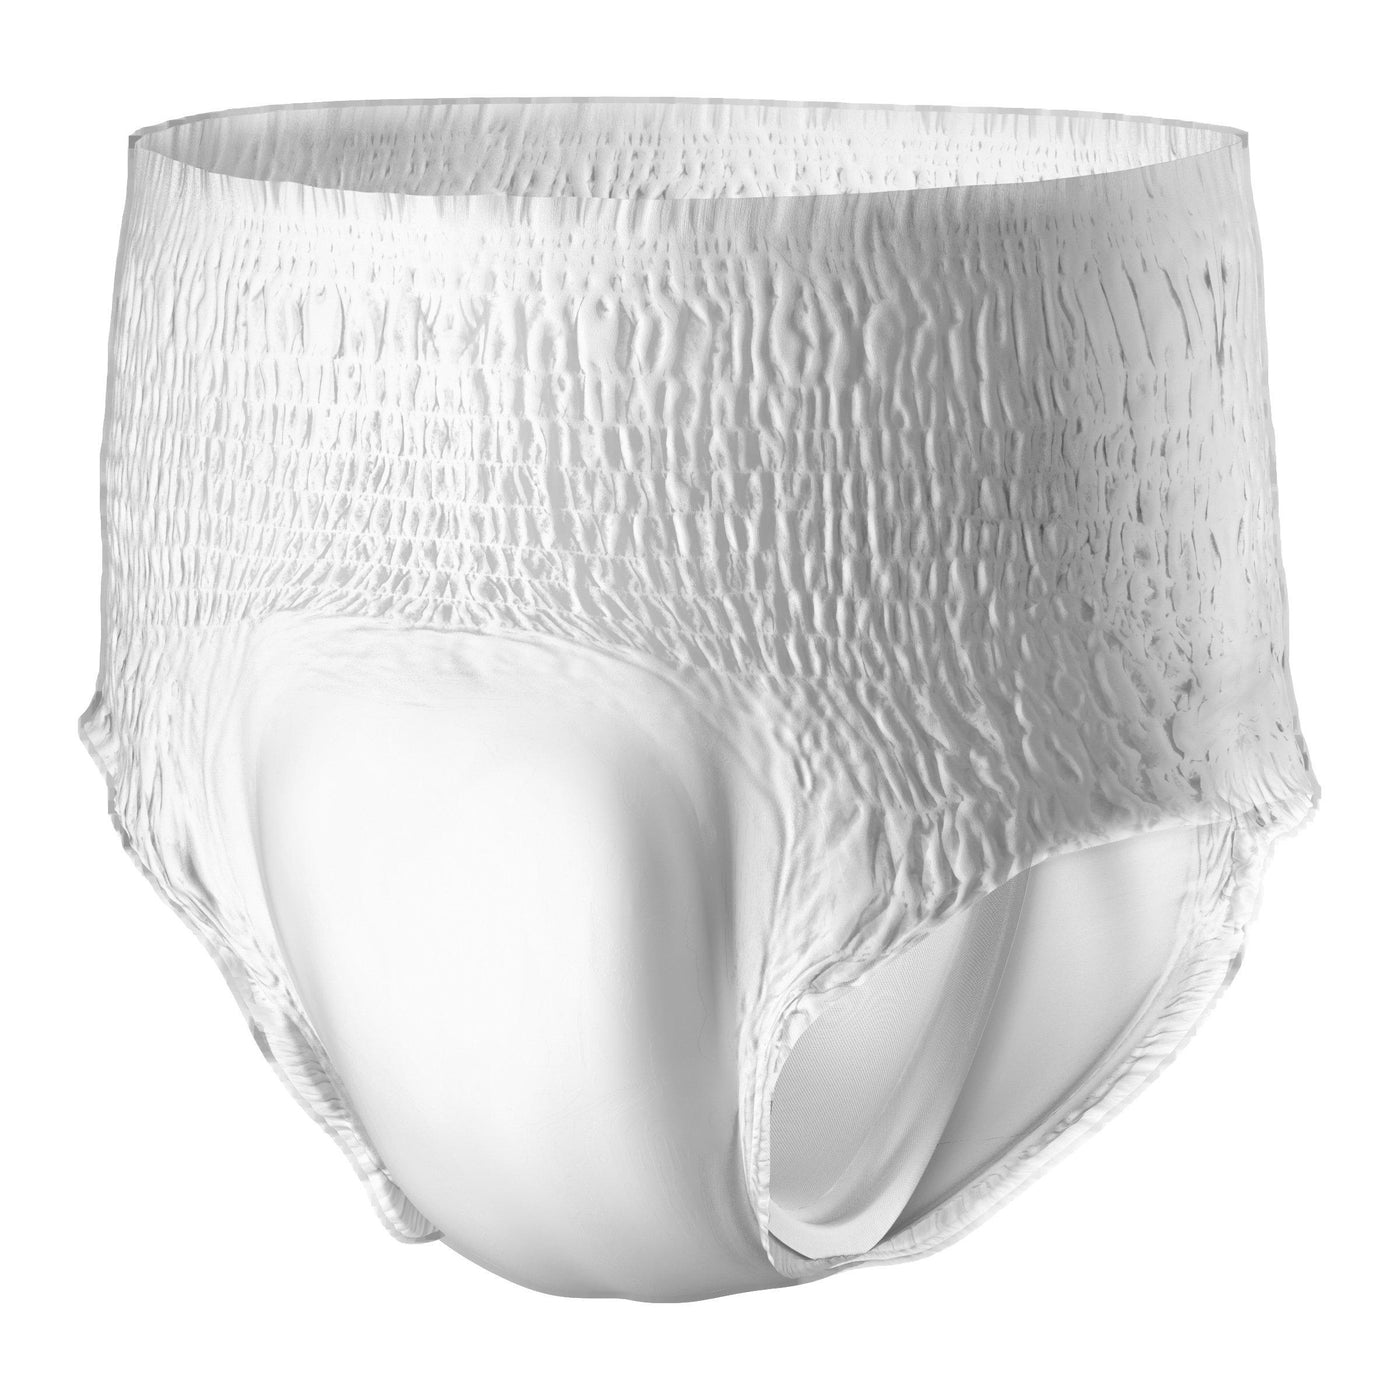 Always Discreet Underwear Maximum - Extra Large - 26's